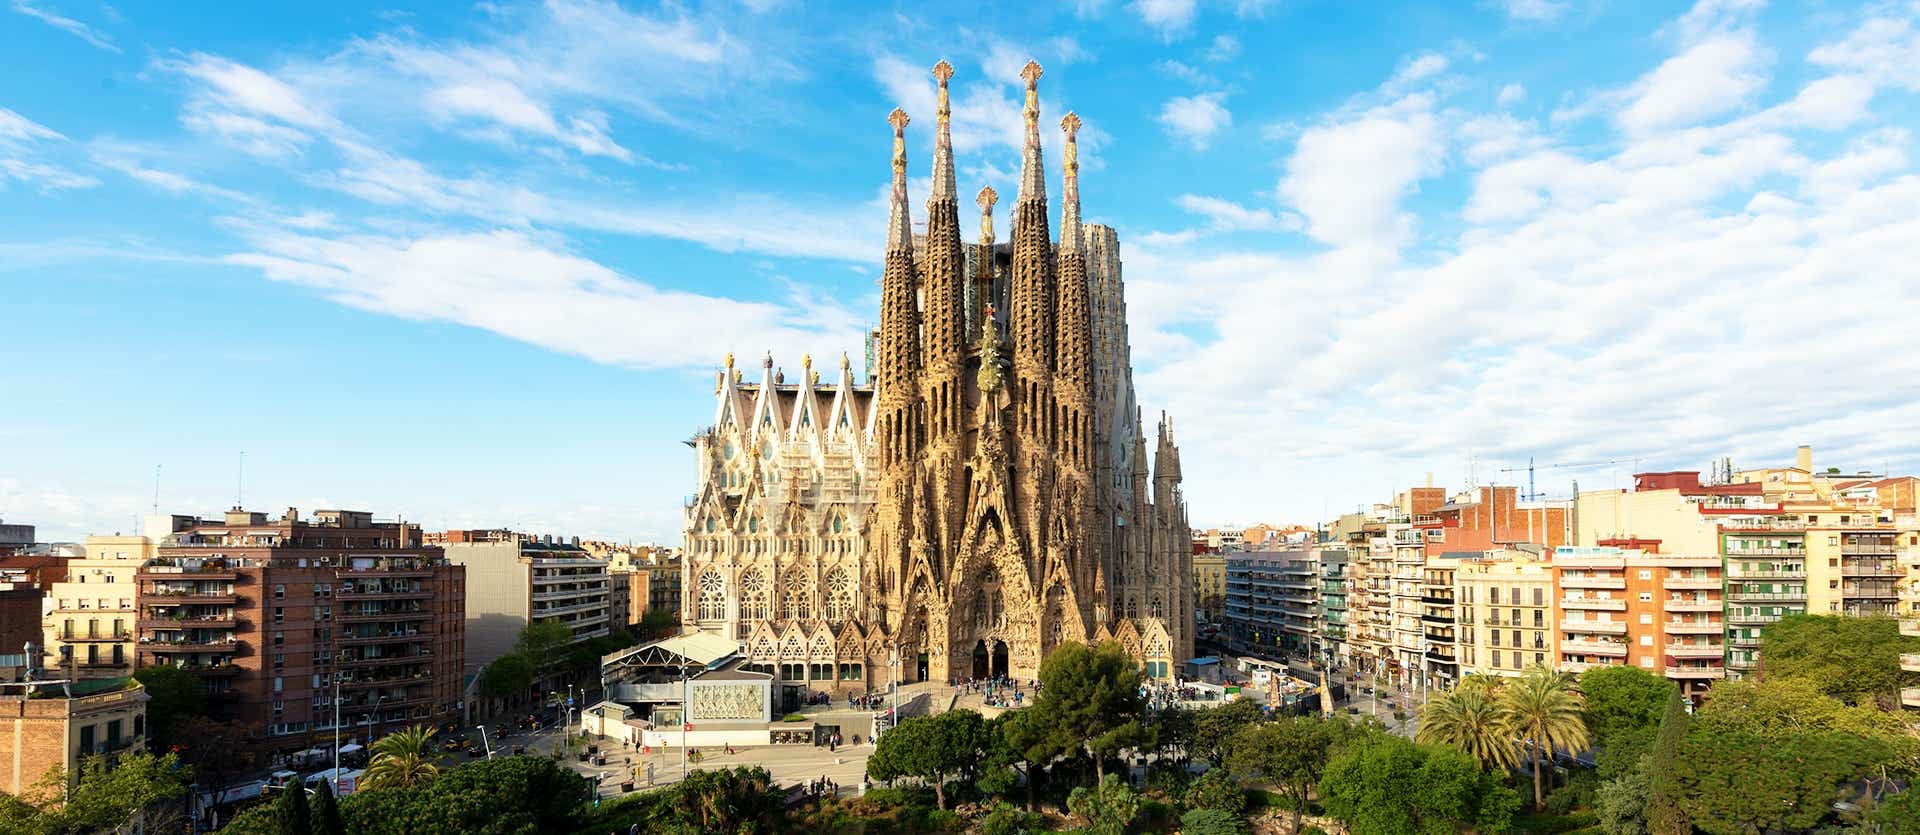 Sagrada Familia  <span class="iconos separador"></span> Barcelona  <span class="iconos separador"></span> Spain